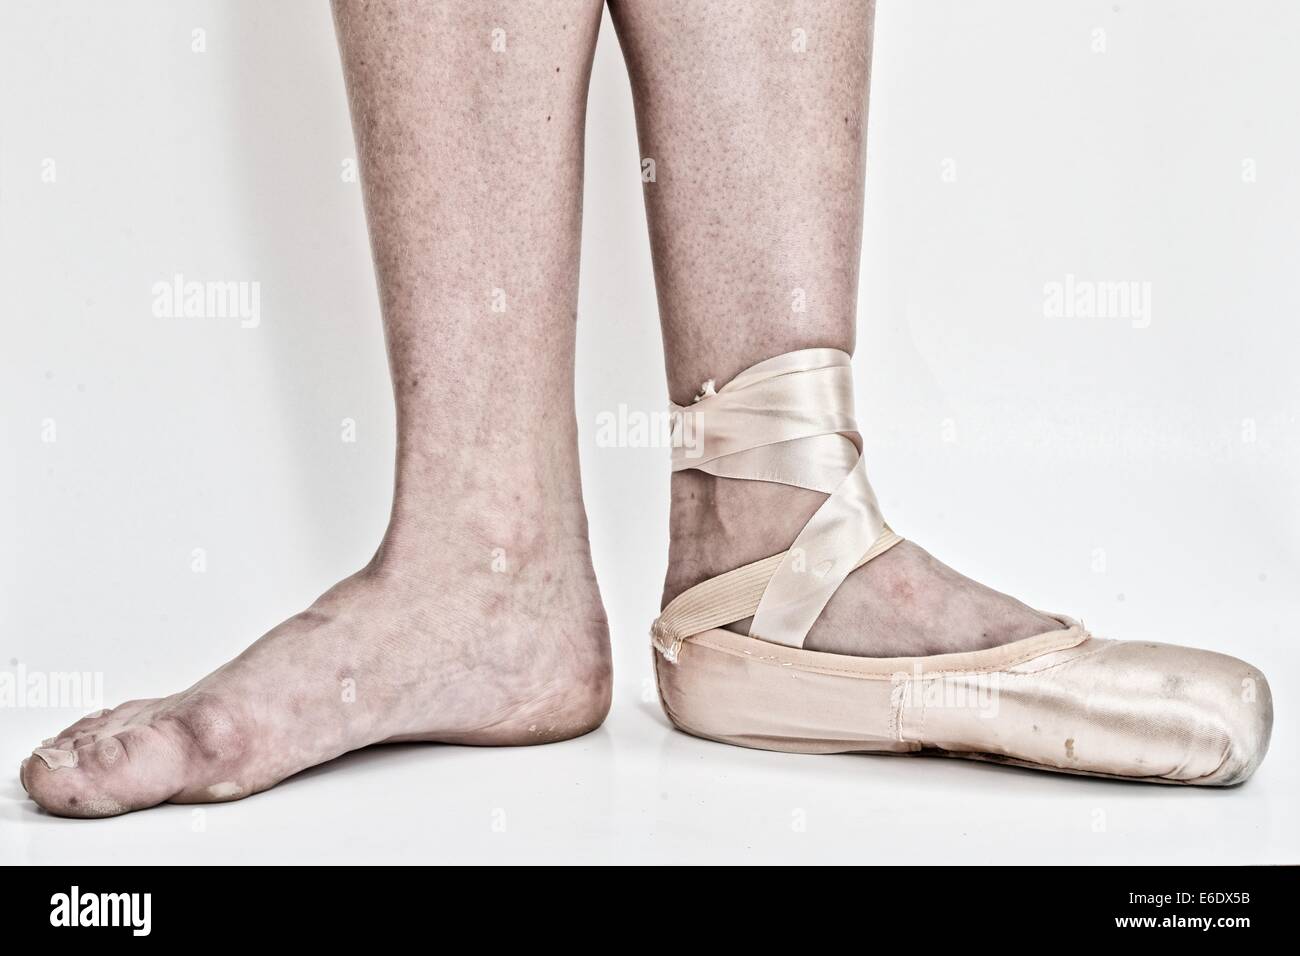 Ballerina Feet Immagini e Fotos Stock - Alamy